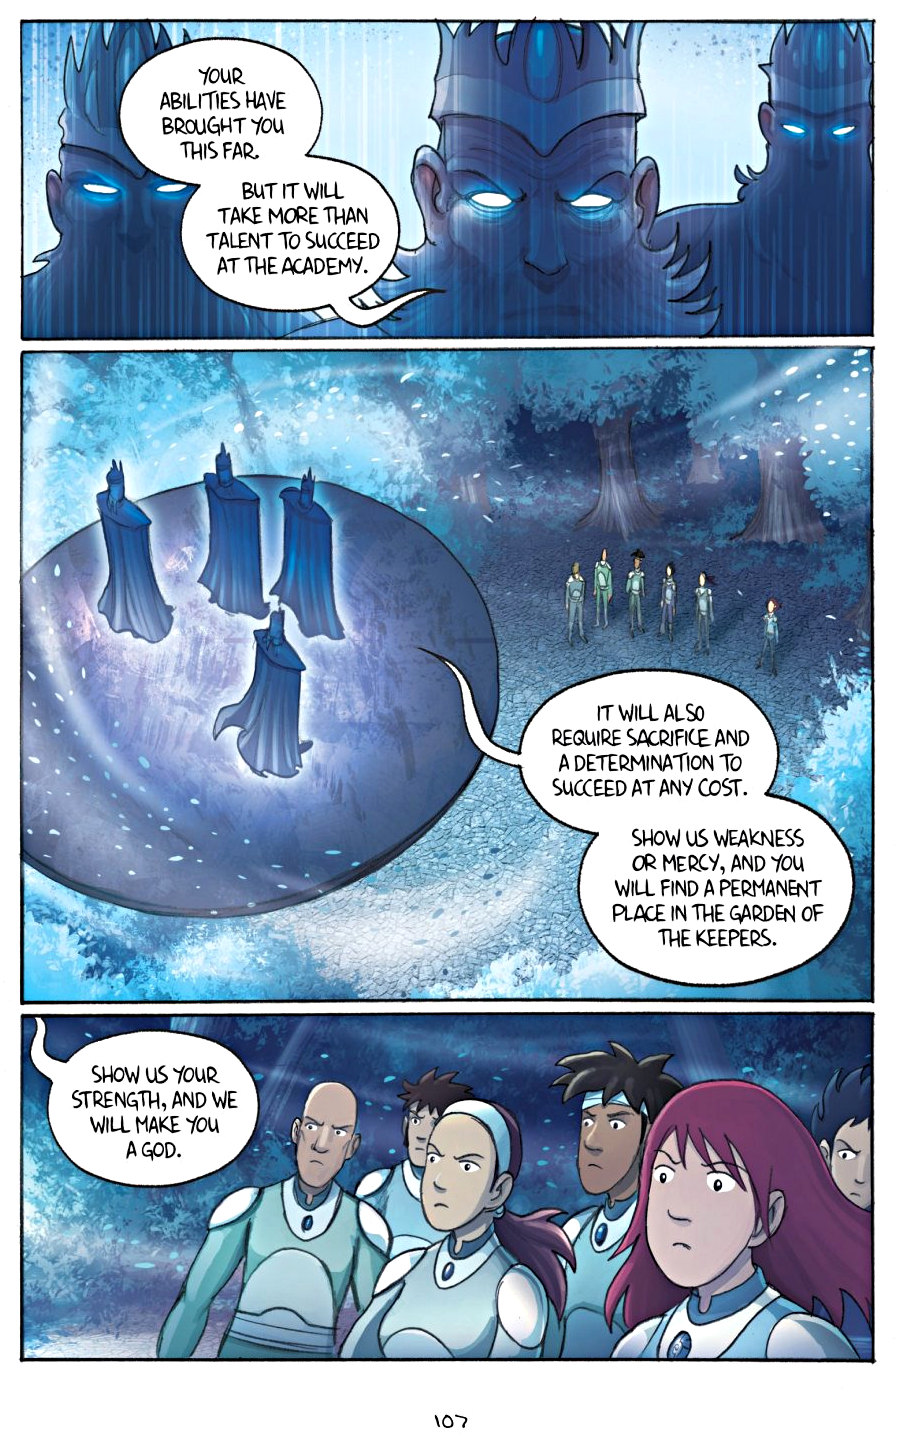 page 107 of amulet 4 last council graphic novel by kazu kibuishi